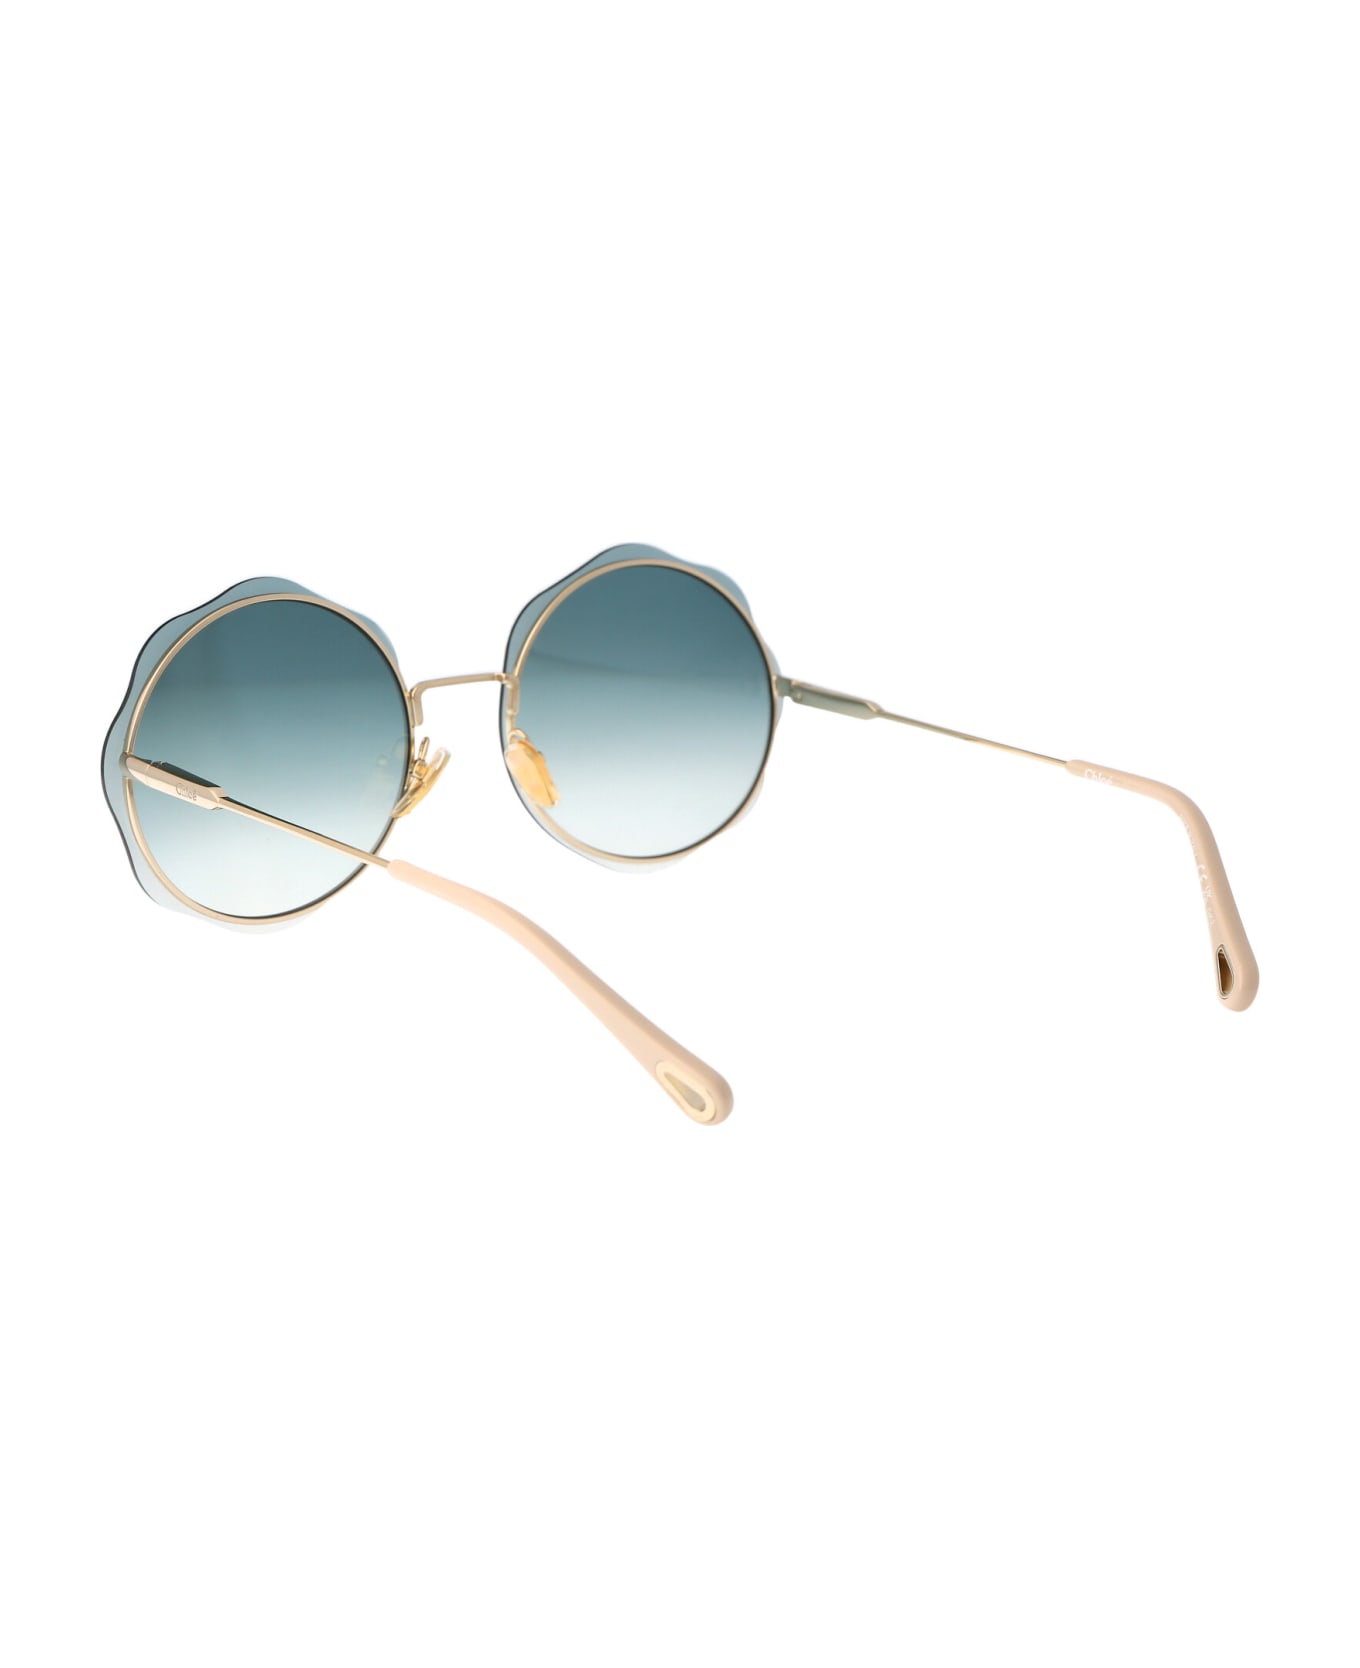 Chloé Eyewear Ch0202s Sunglasses - 002 GOLD GOLD GREEN サングラス